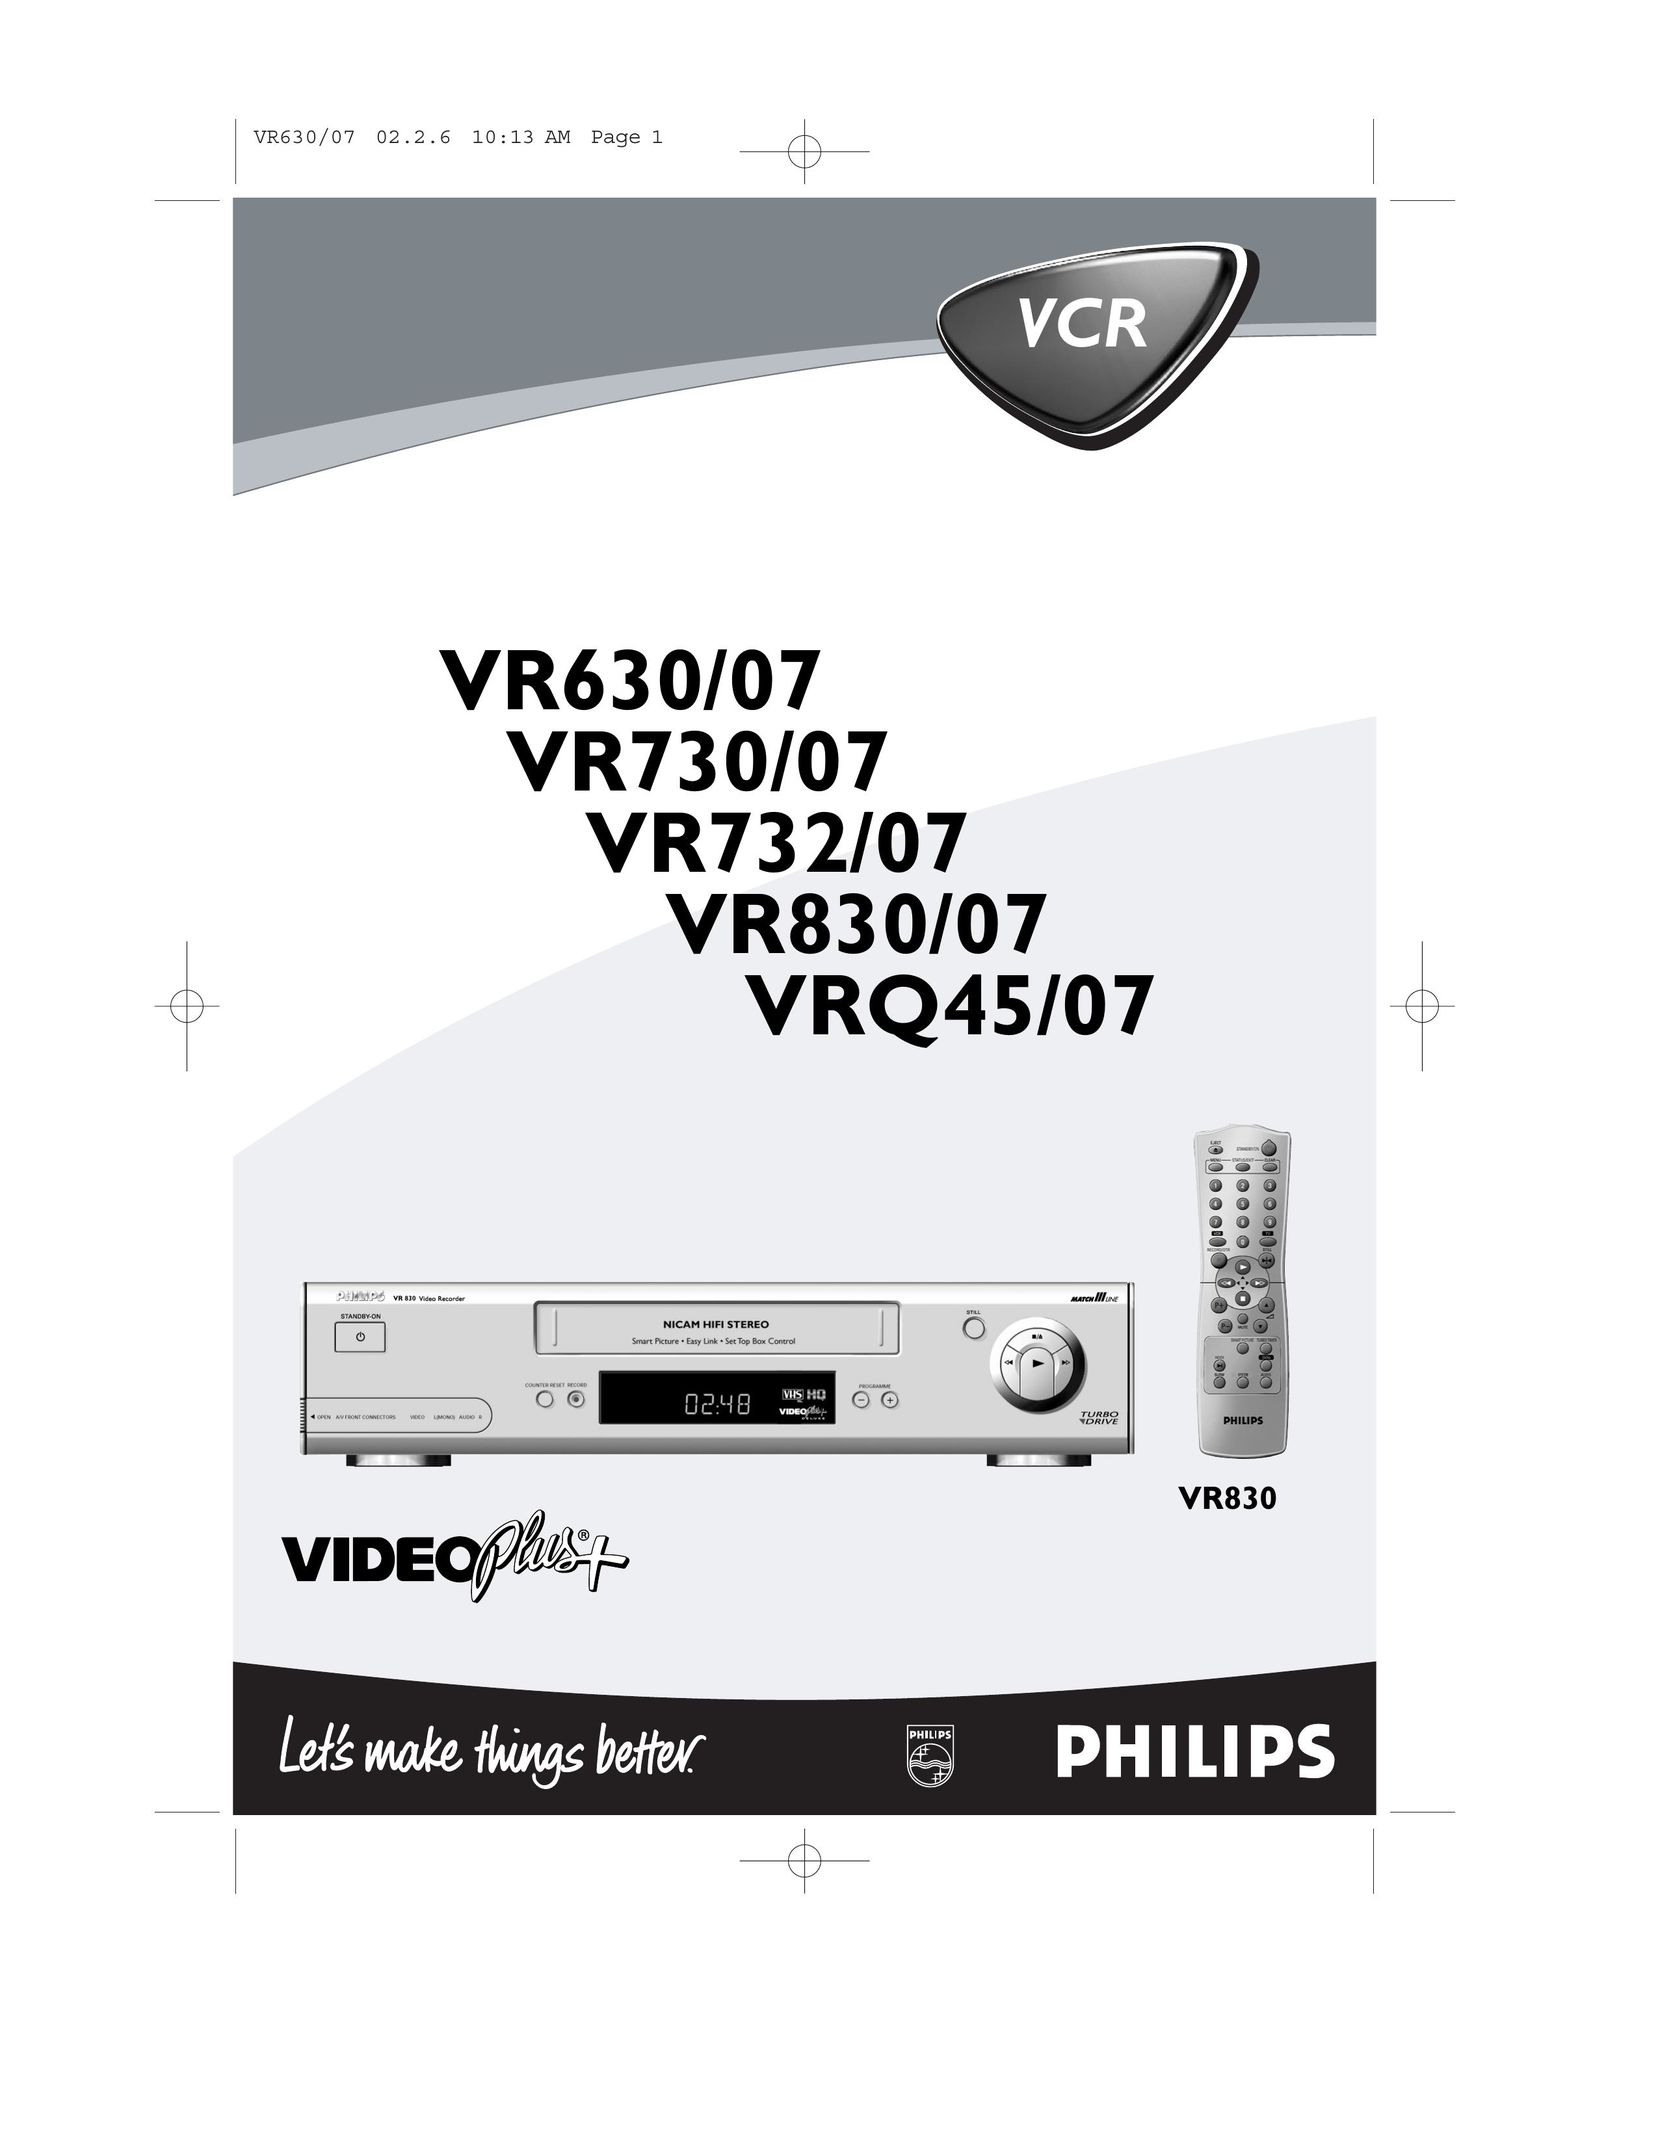 Polycom VR630/07 VCR User Manual